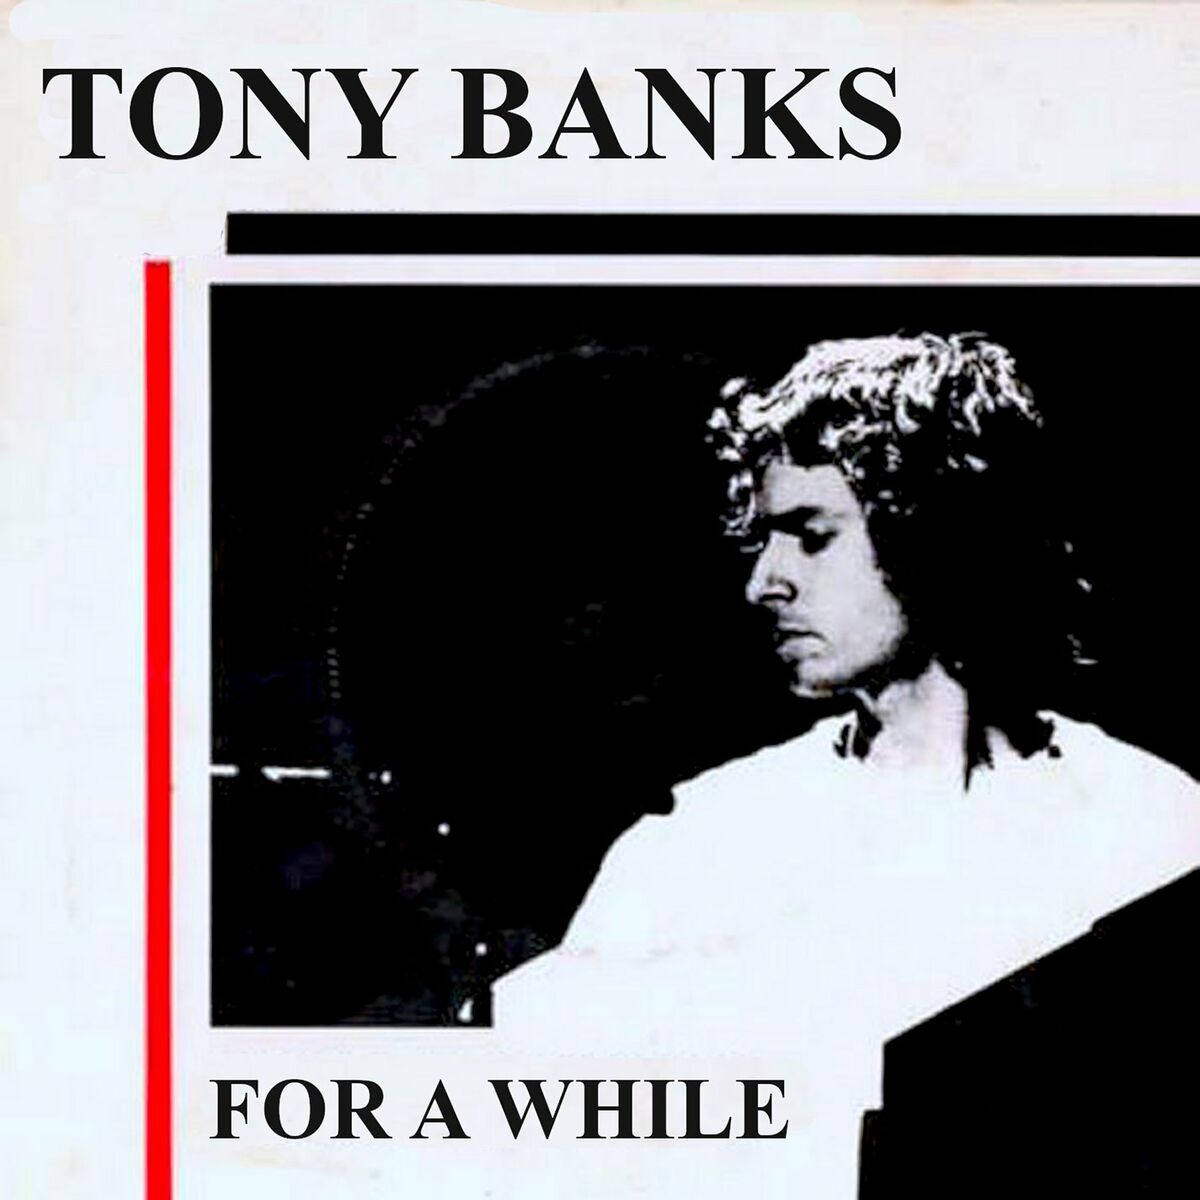 Tony Banks: albums, songs, playlists | Listen on Deezer